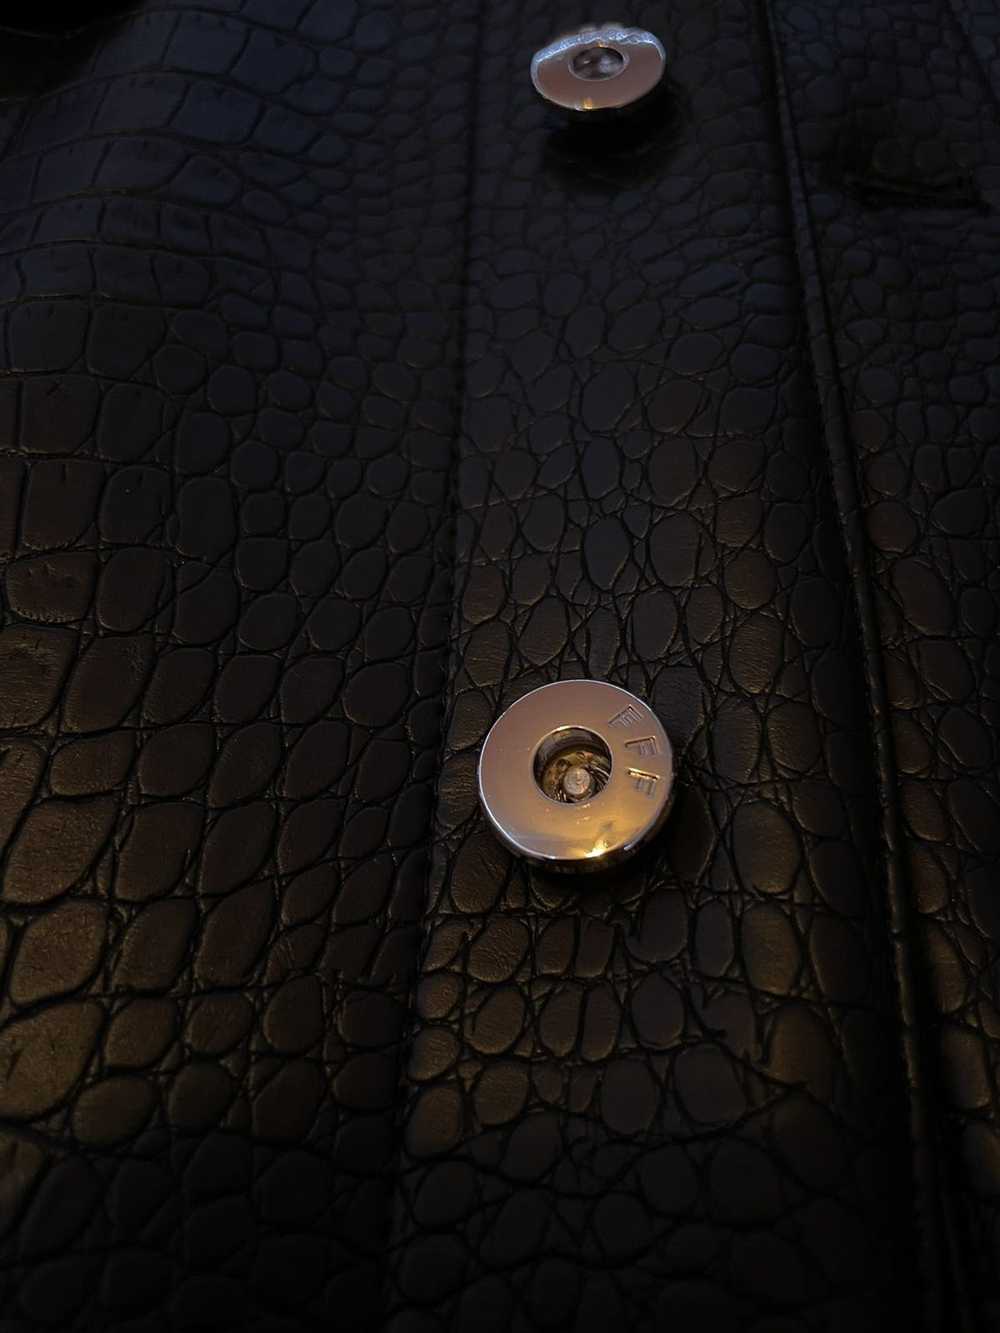 Luxury Crocodile Print Leather Jacket - DONCARE - image 6